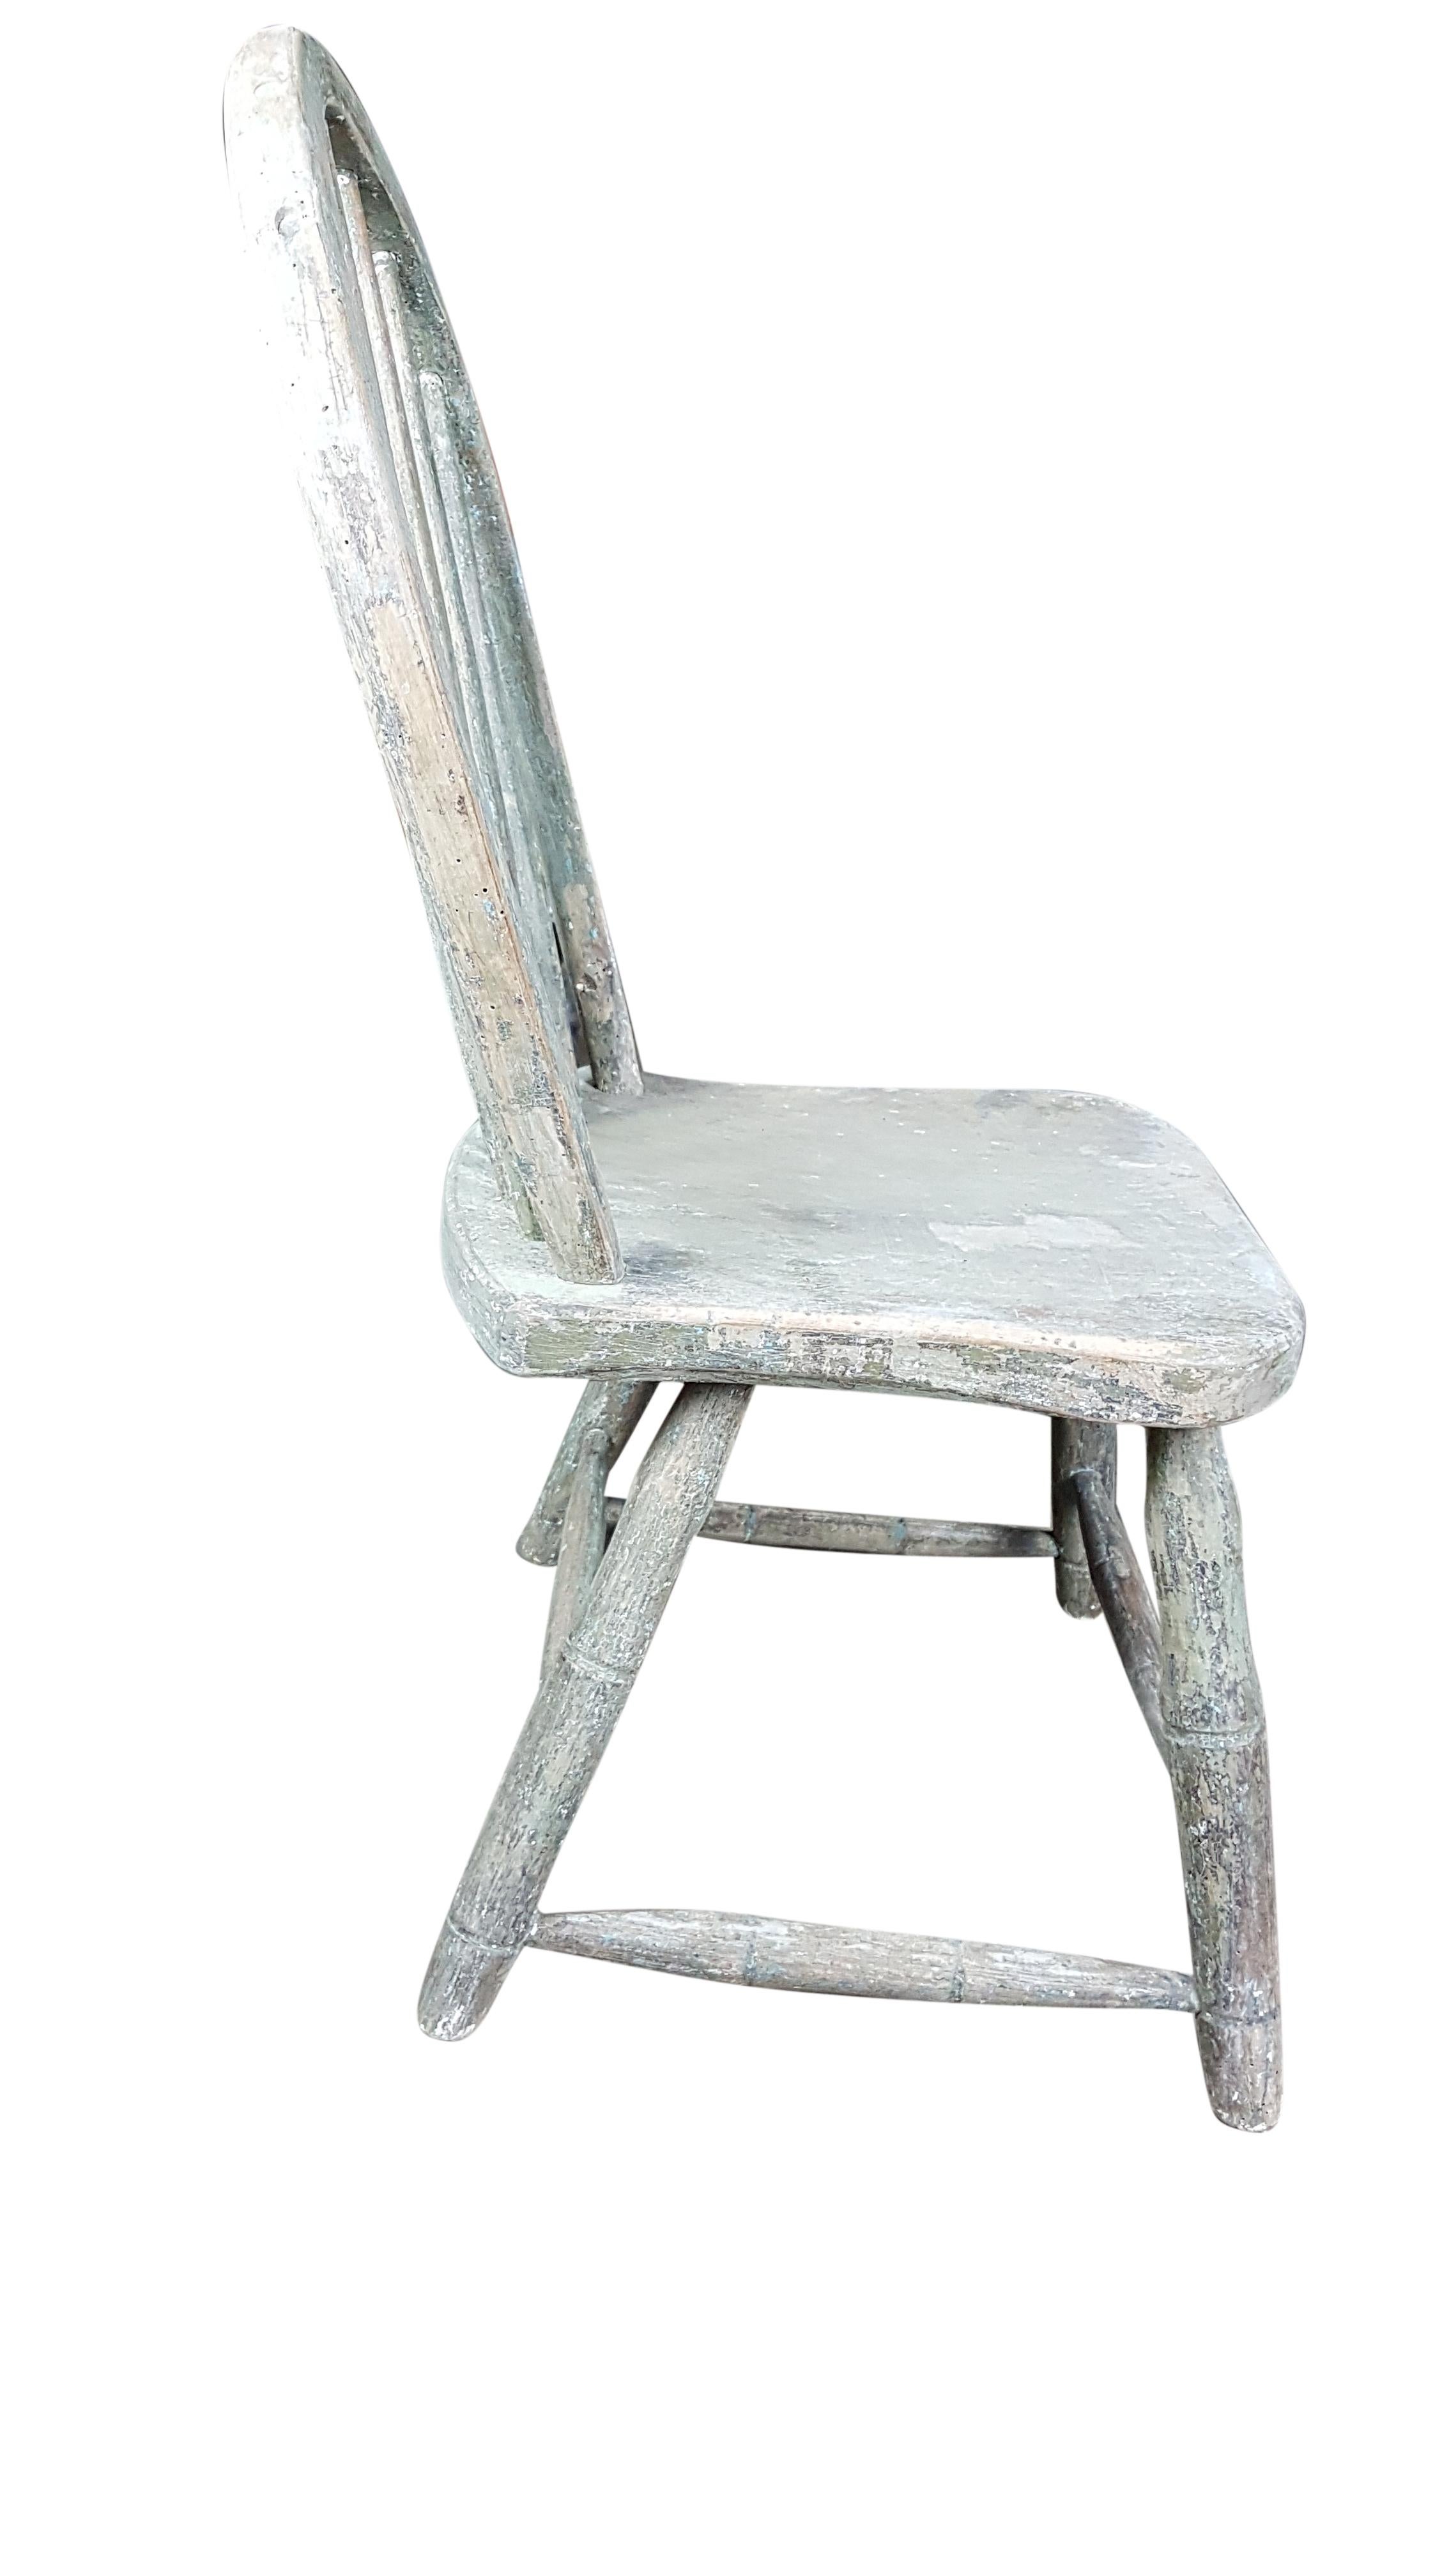 19th Century Yealmpton Chair in Original Finish In Distressed Condition For Sale In Bodicote, Oxfordshire